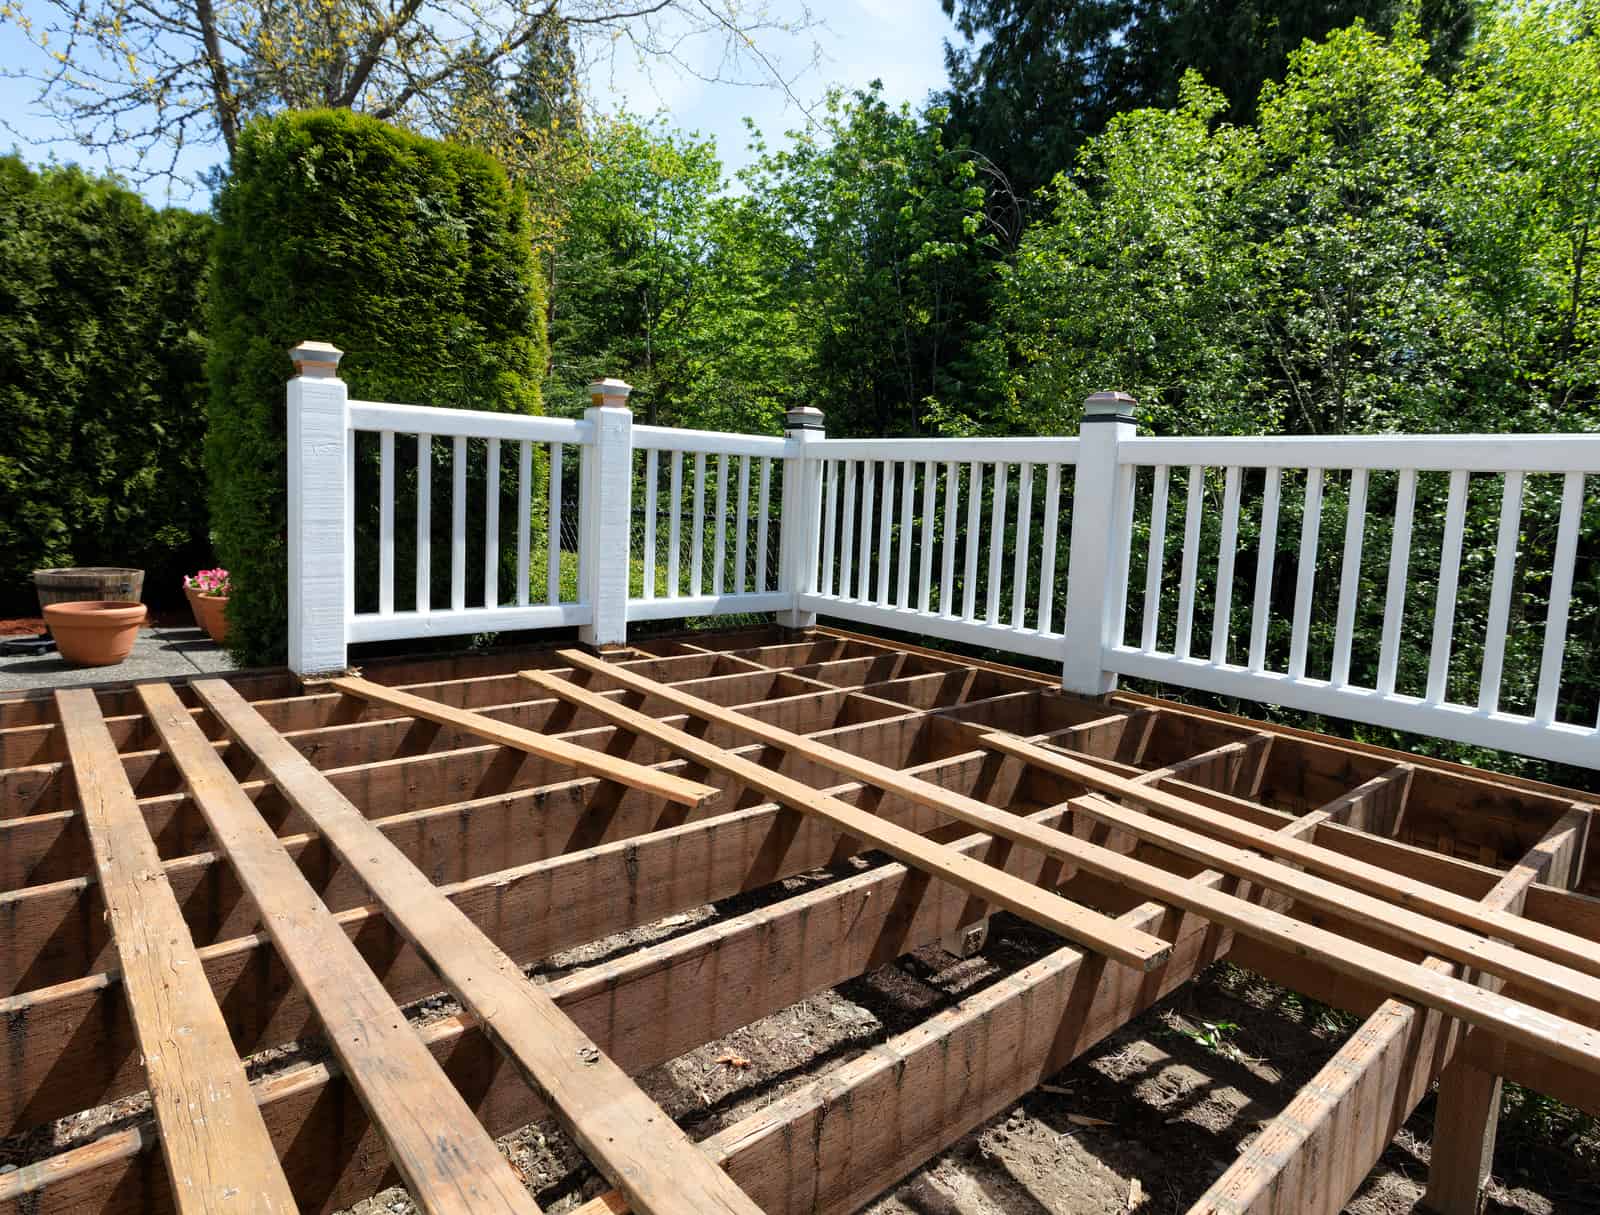 Deck undergoing renovation